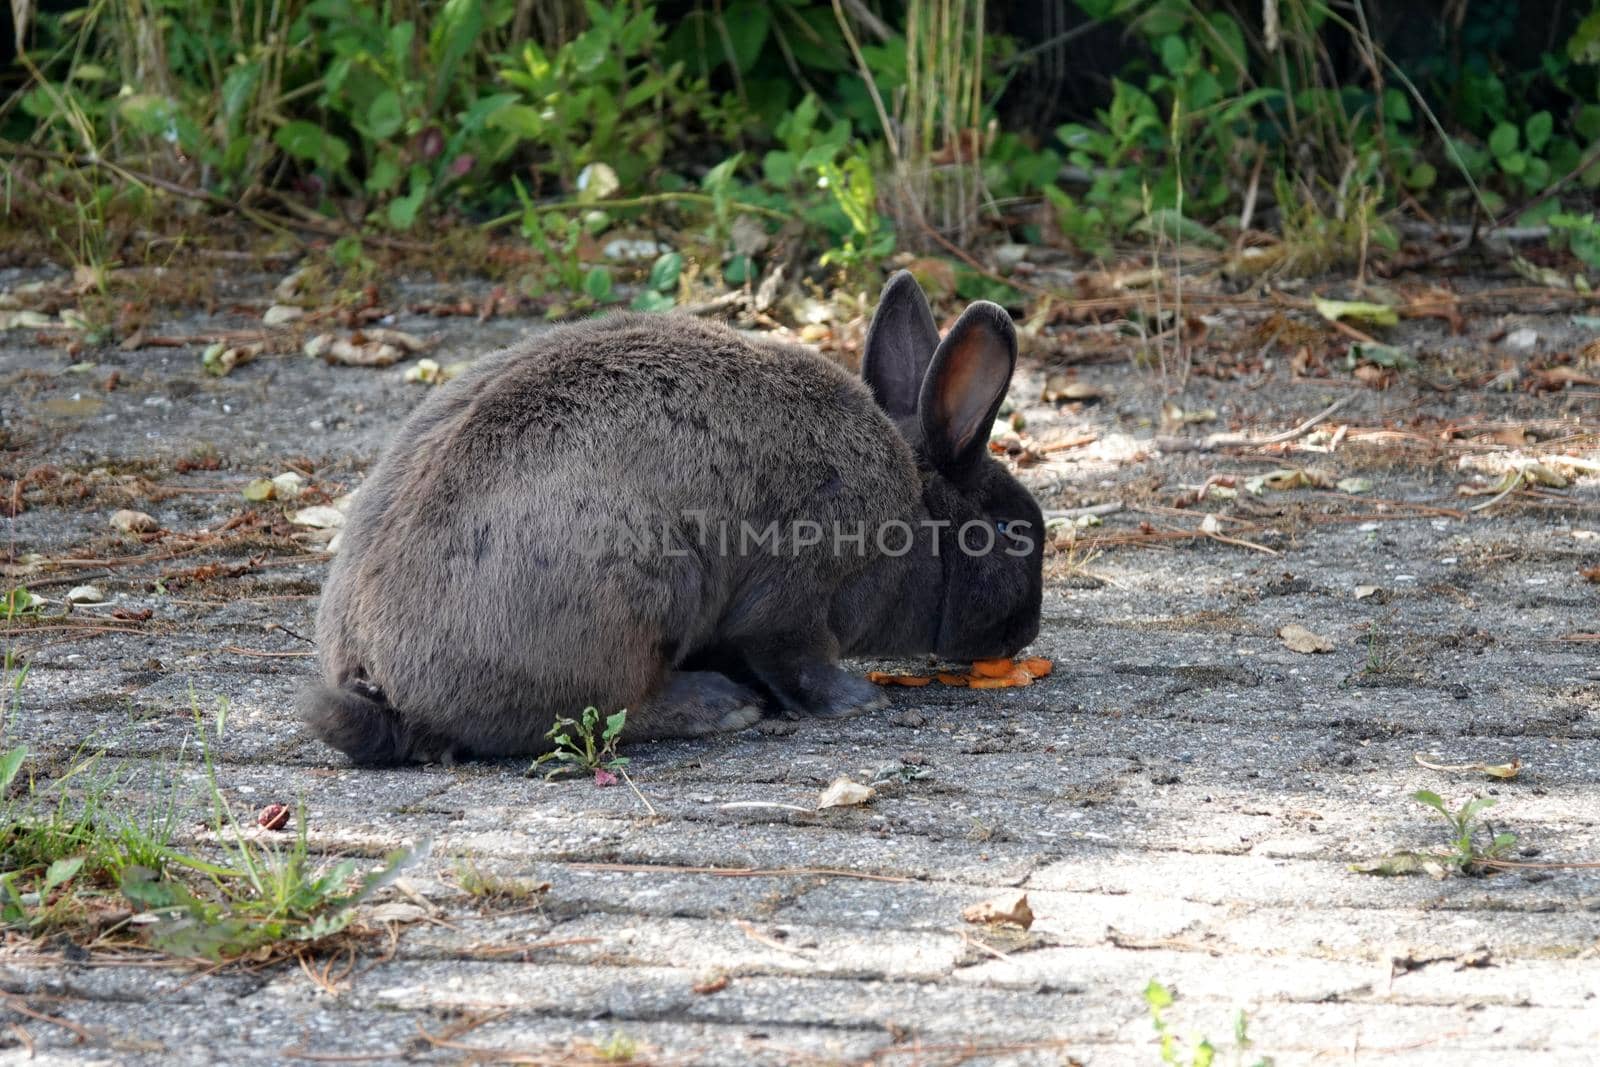 A happy rabbit consuming a carrot by WielandTeixeira